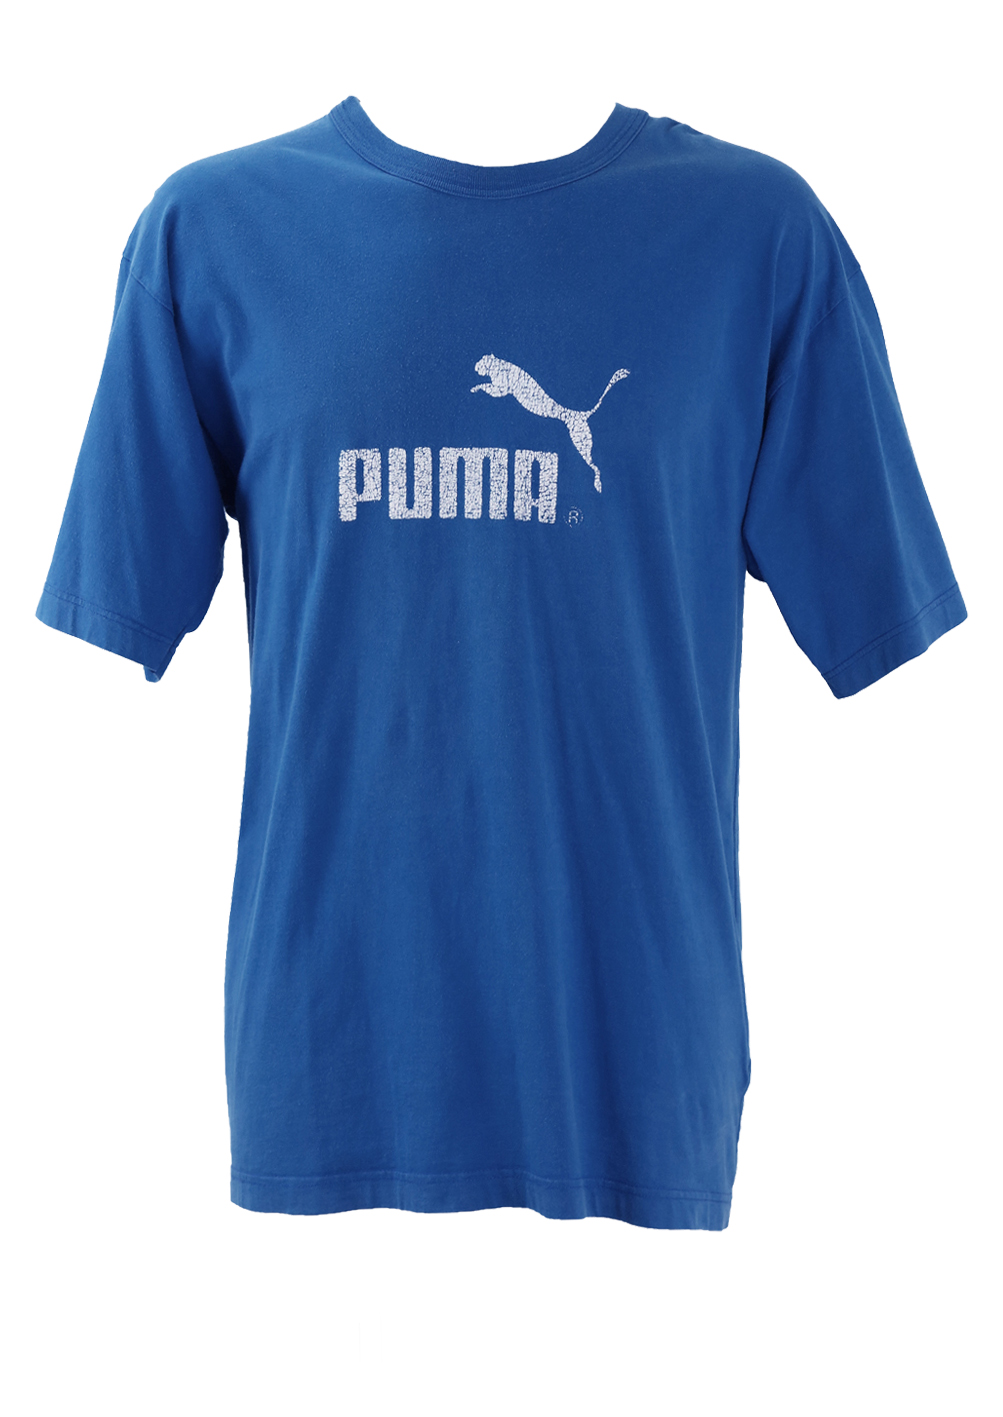 red white and blue puma shirt